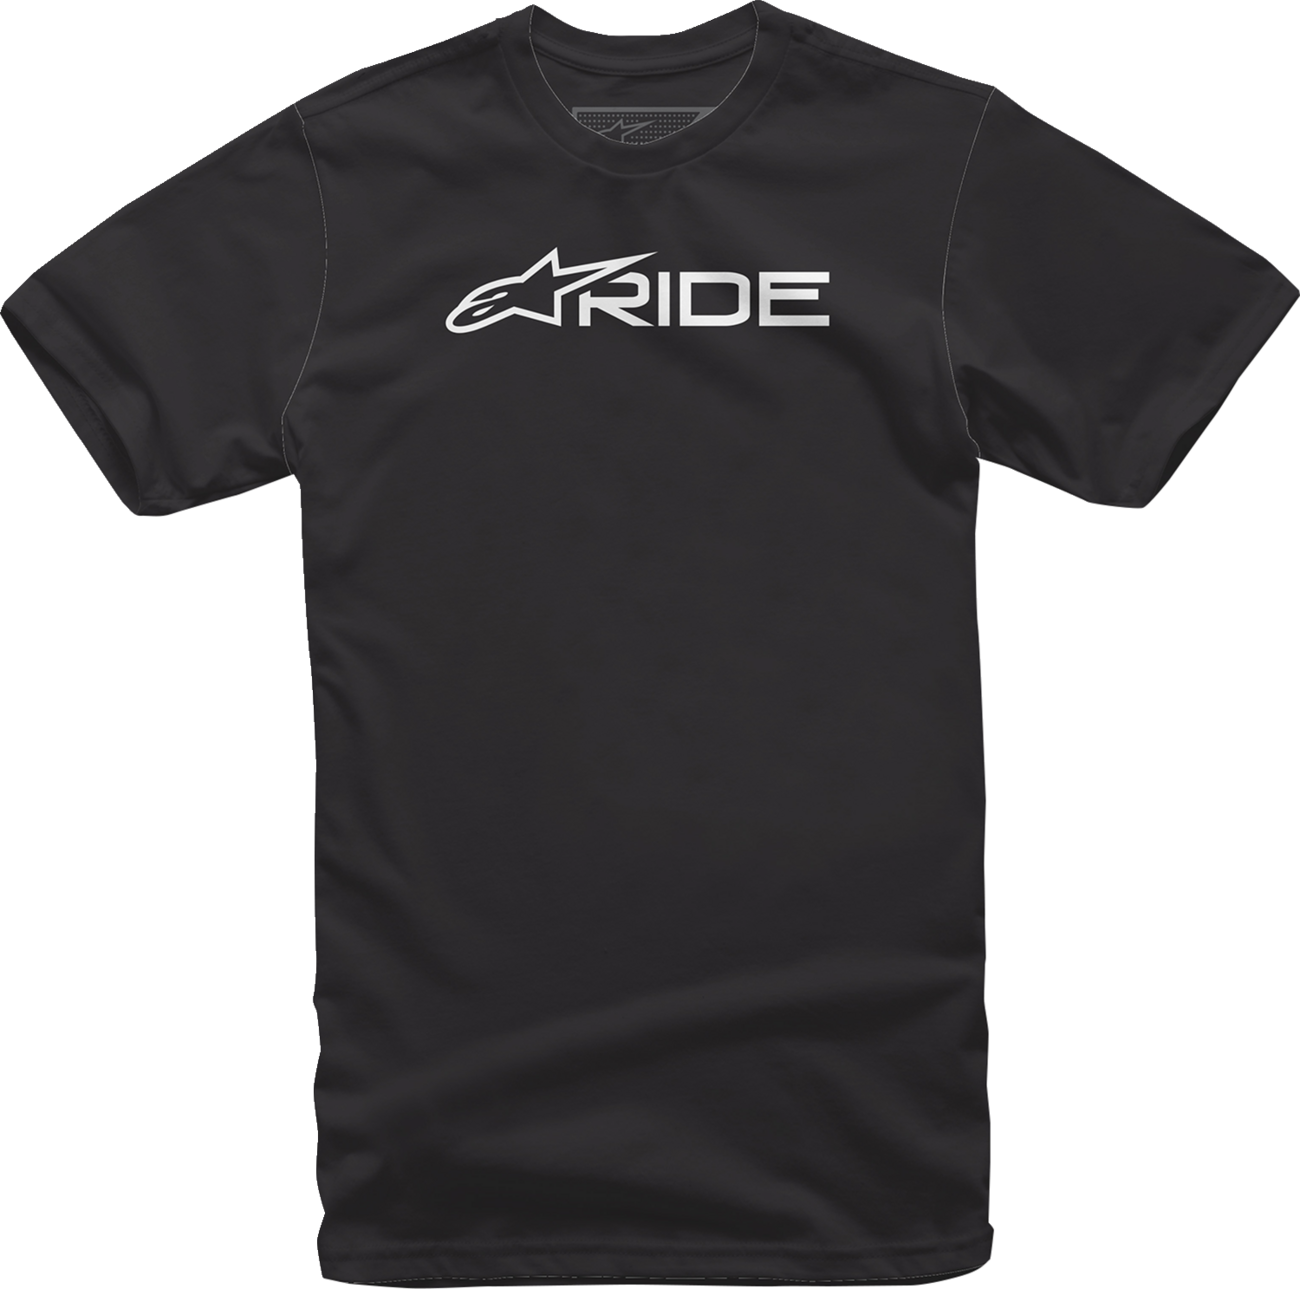 ALPINESTARS Ride 3.0 T-Shirt - Black/White - XL 1232722001020XL